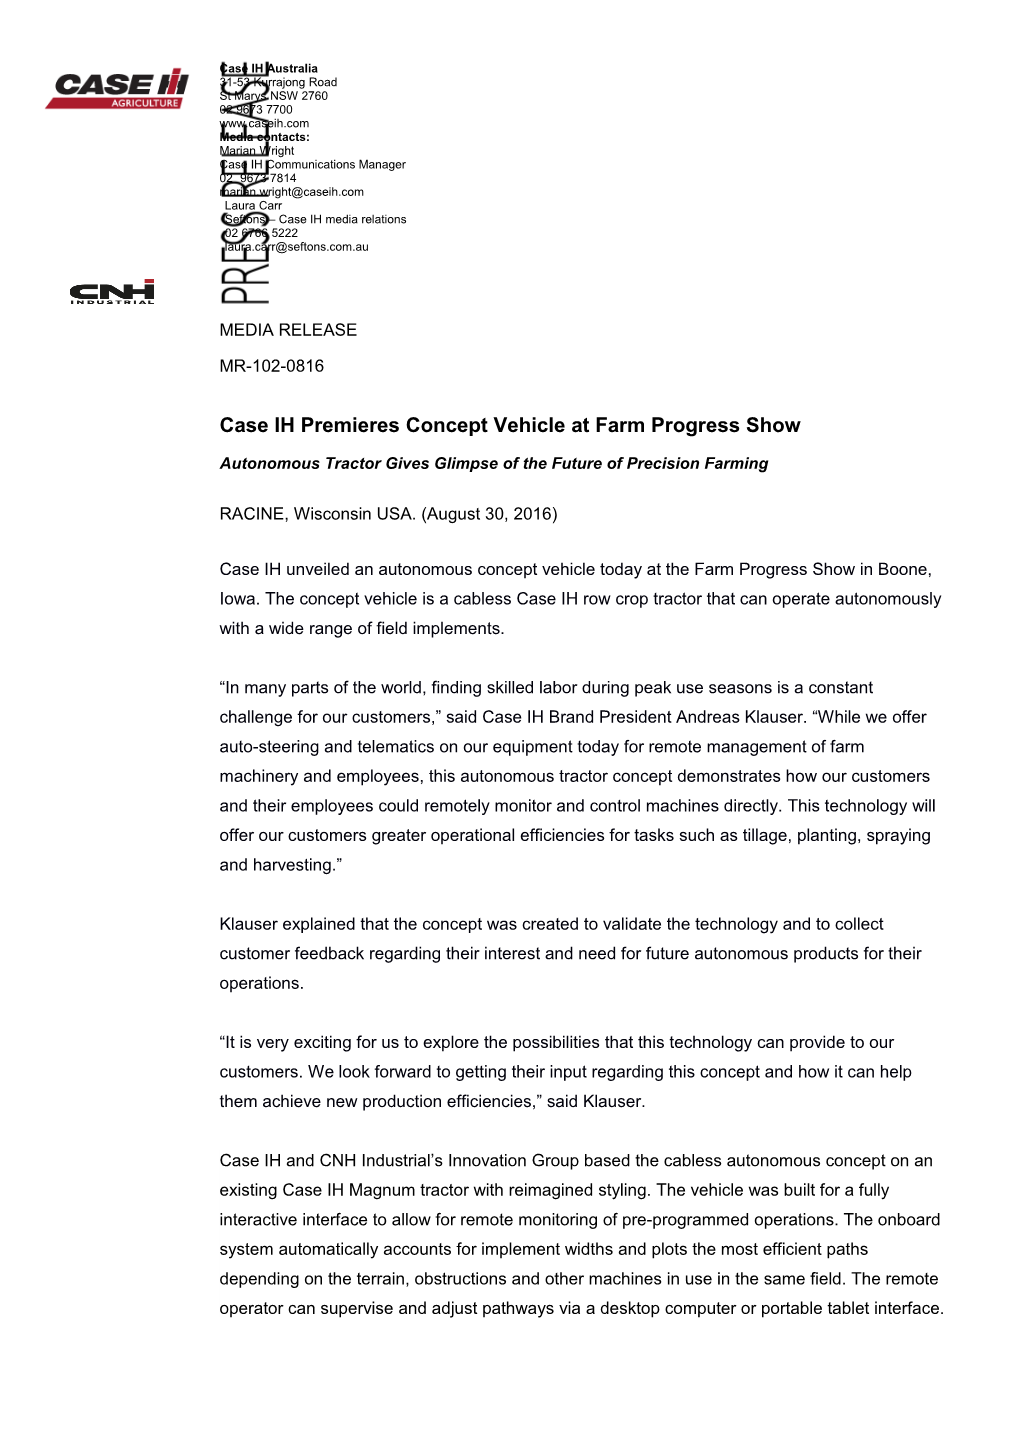 MR 102 Case IH Premieres Concept Vehicle at Farm Progress Show